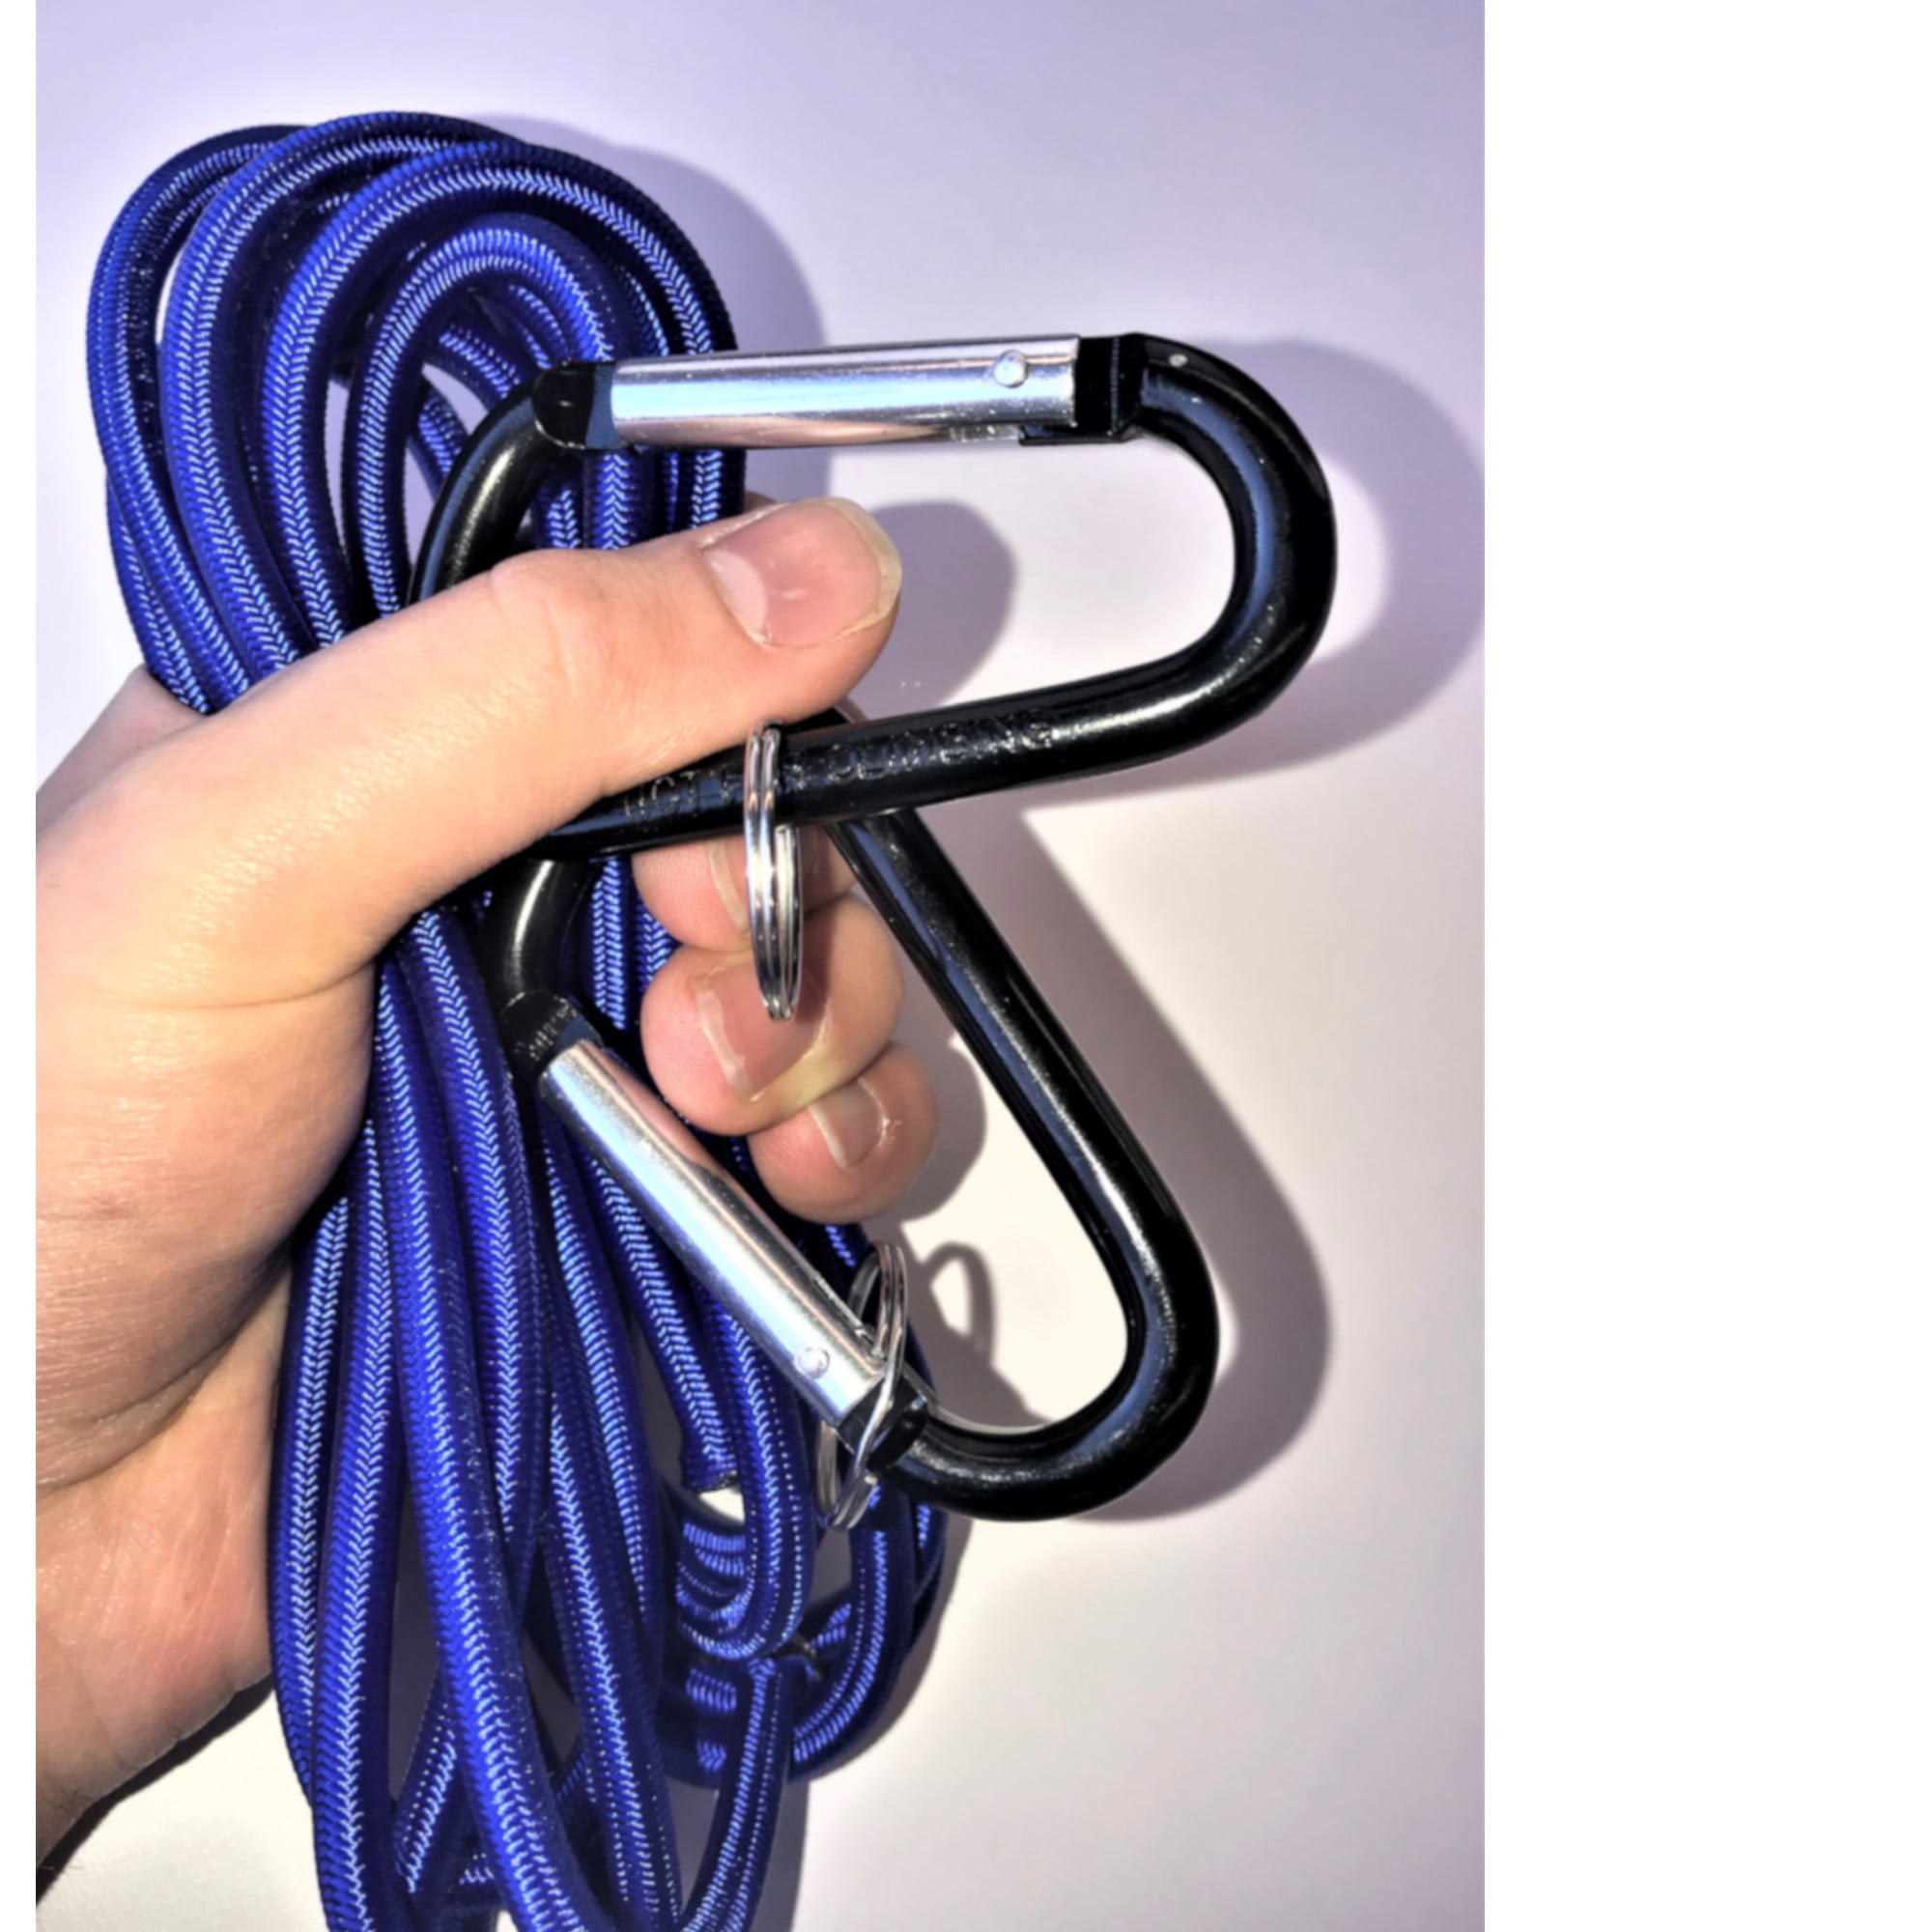 blue shock cord